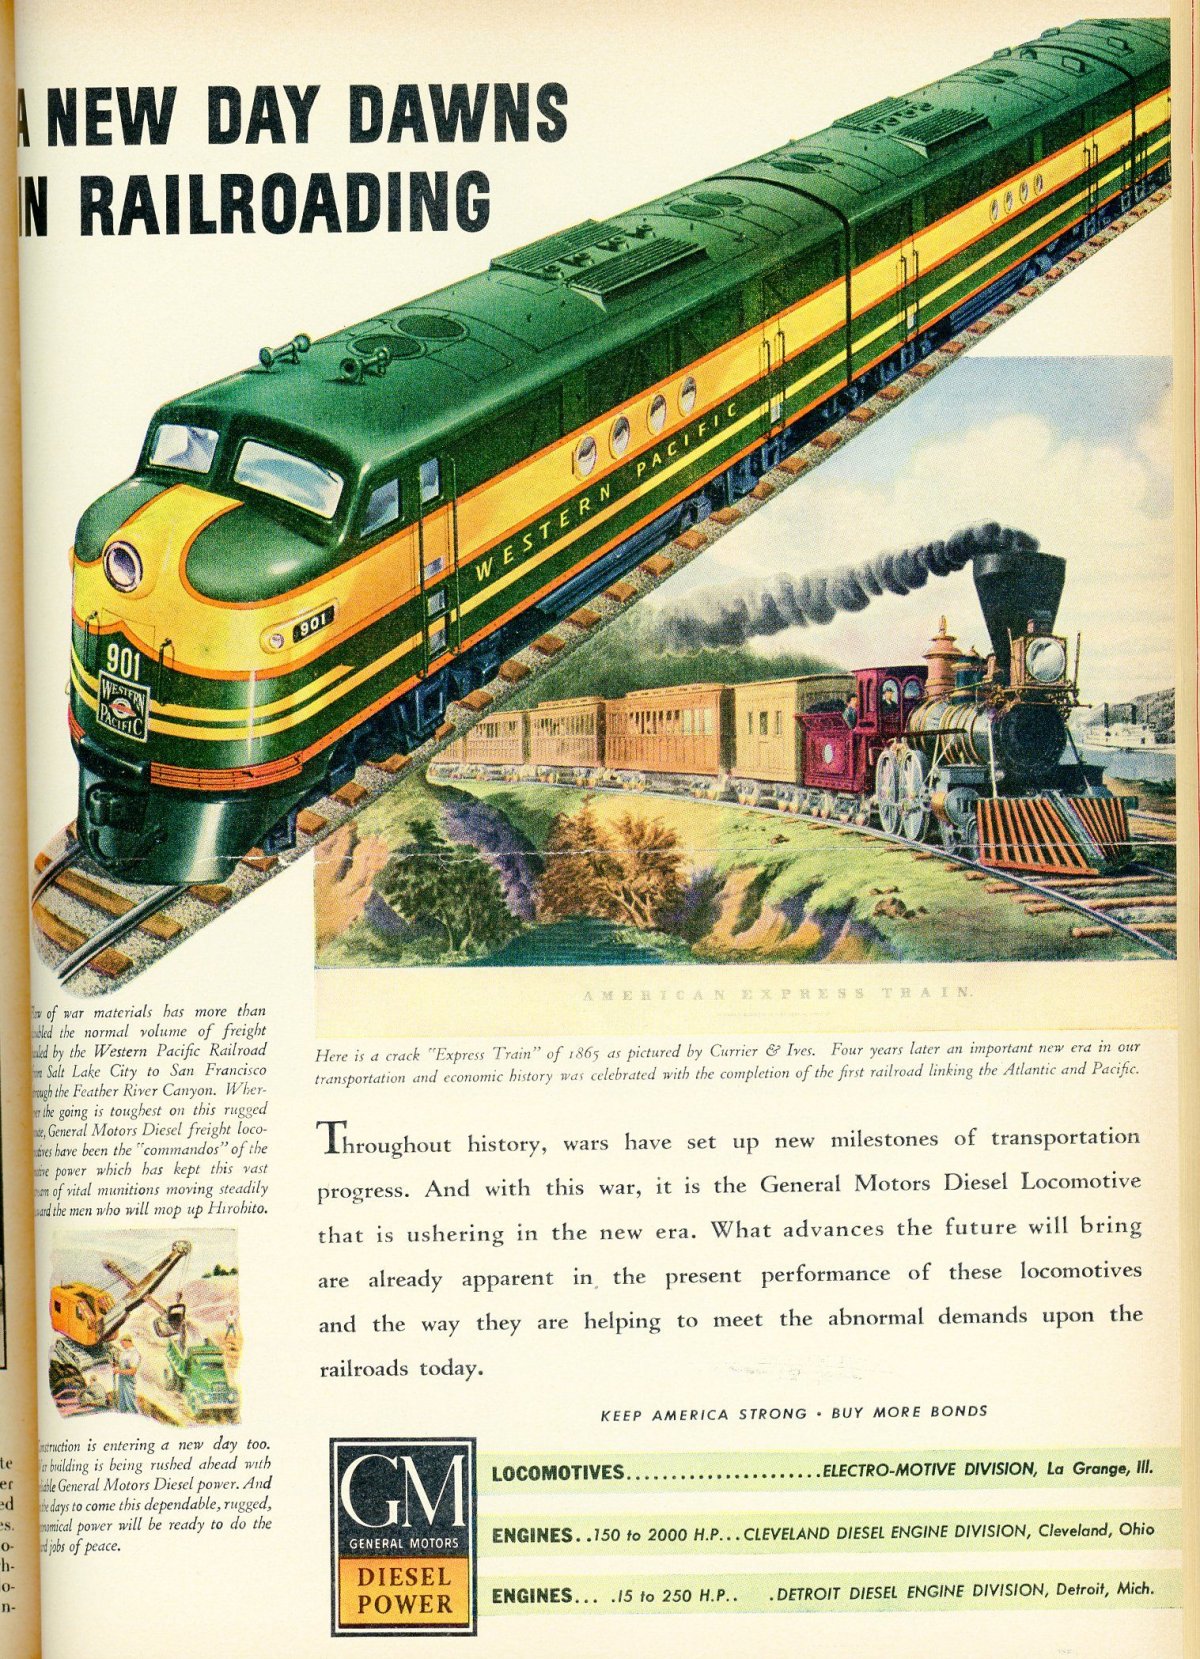 1943 advertisement